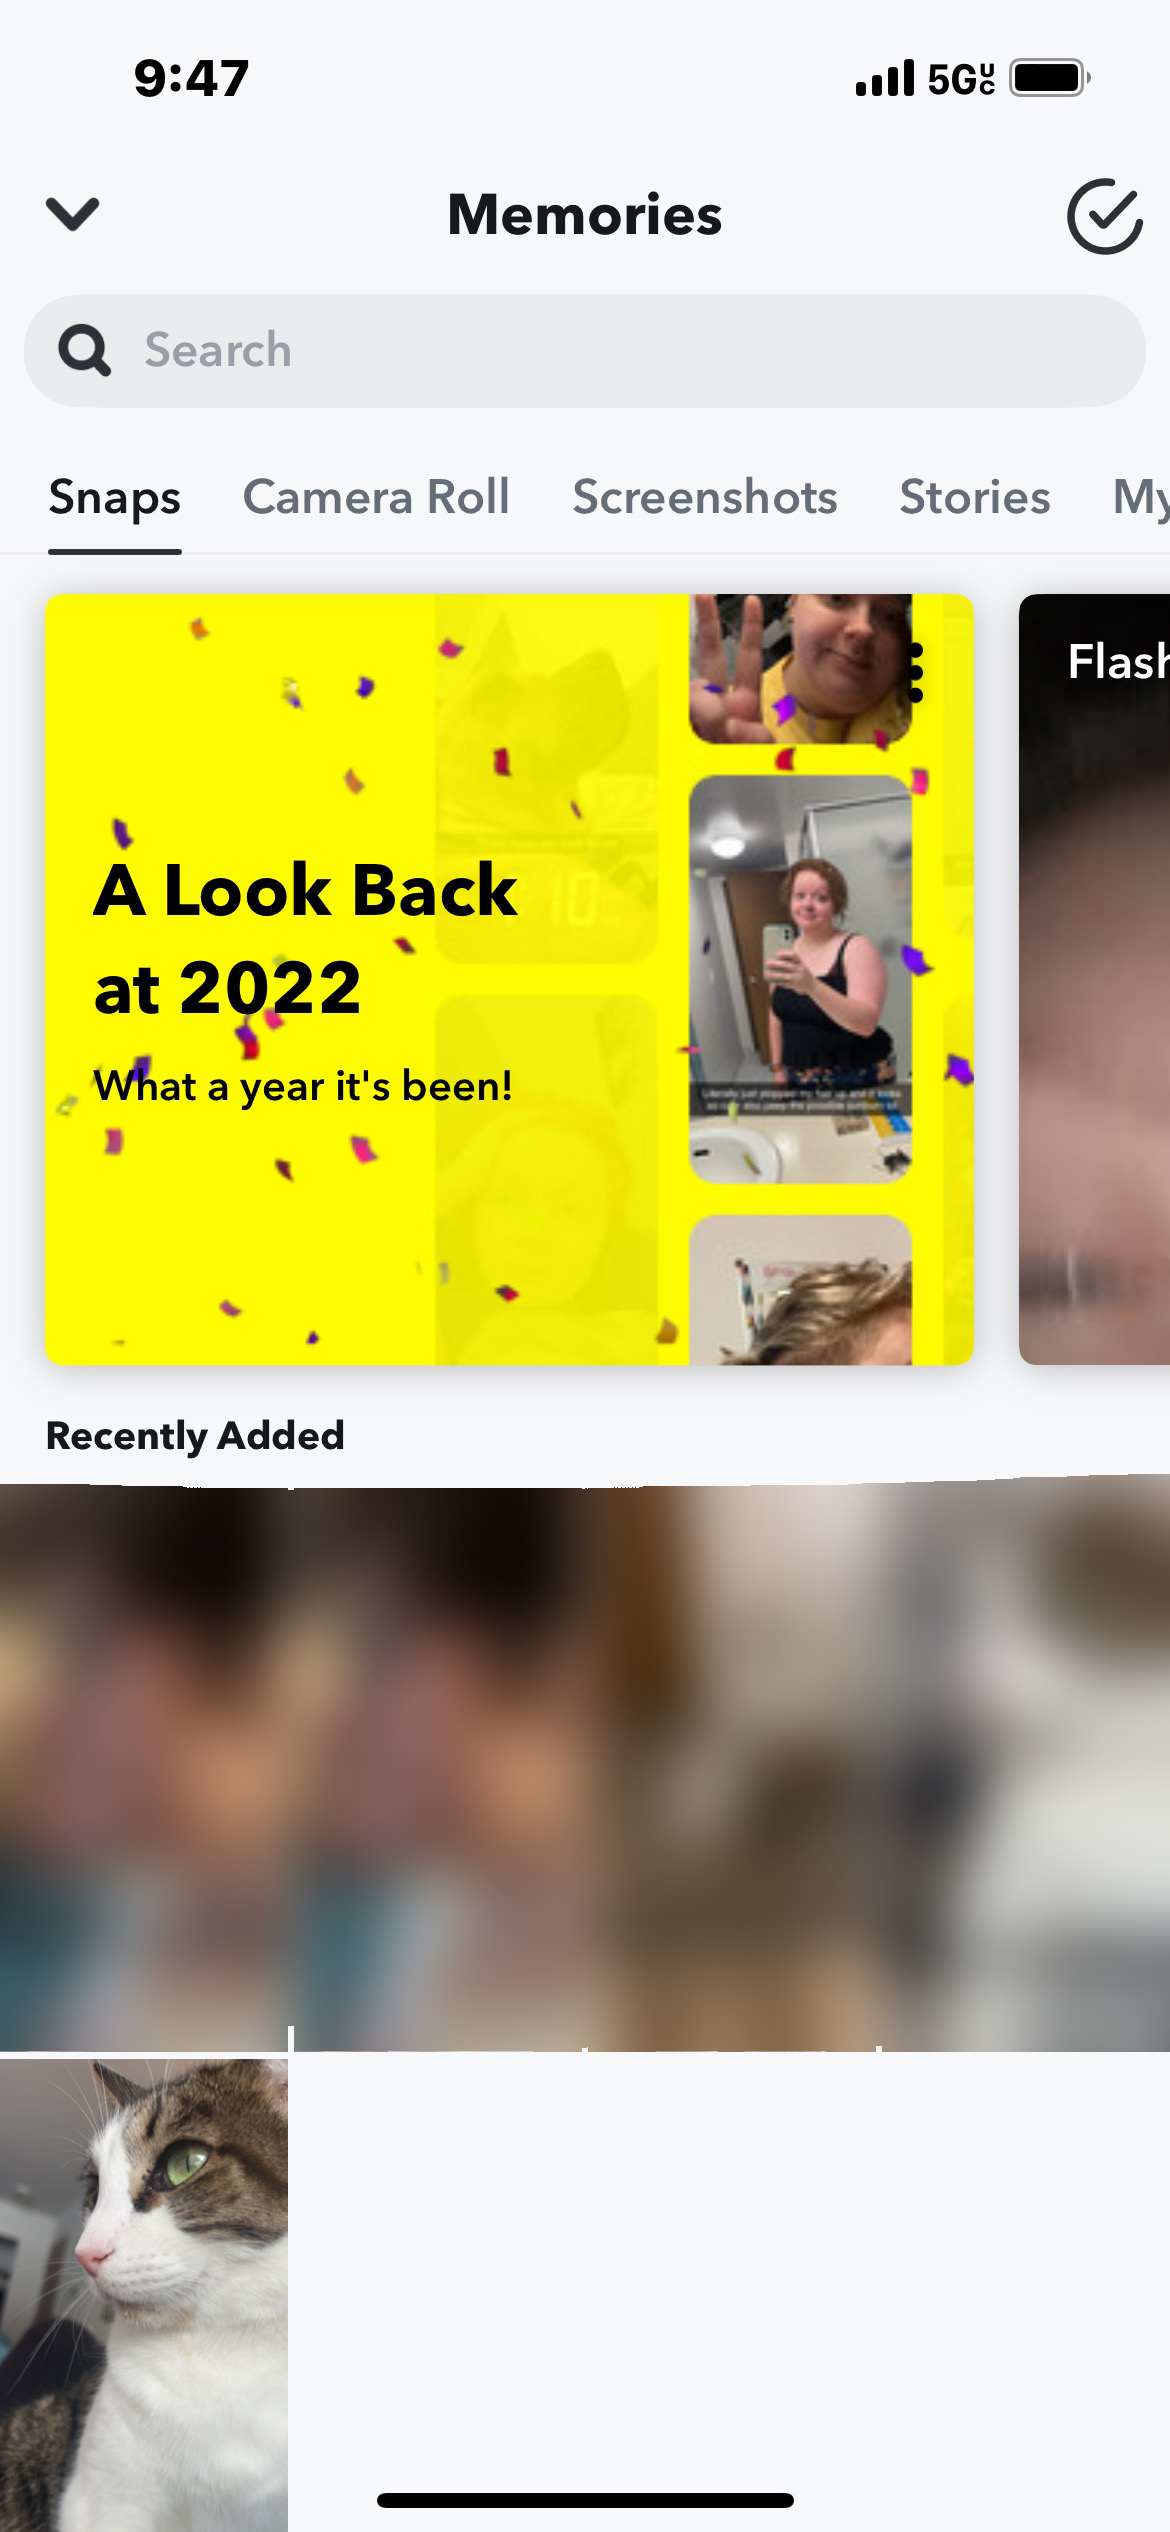 Resumo do final do ano do Snapchat 2022.